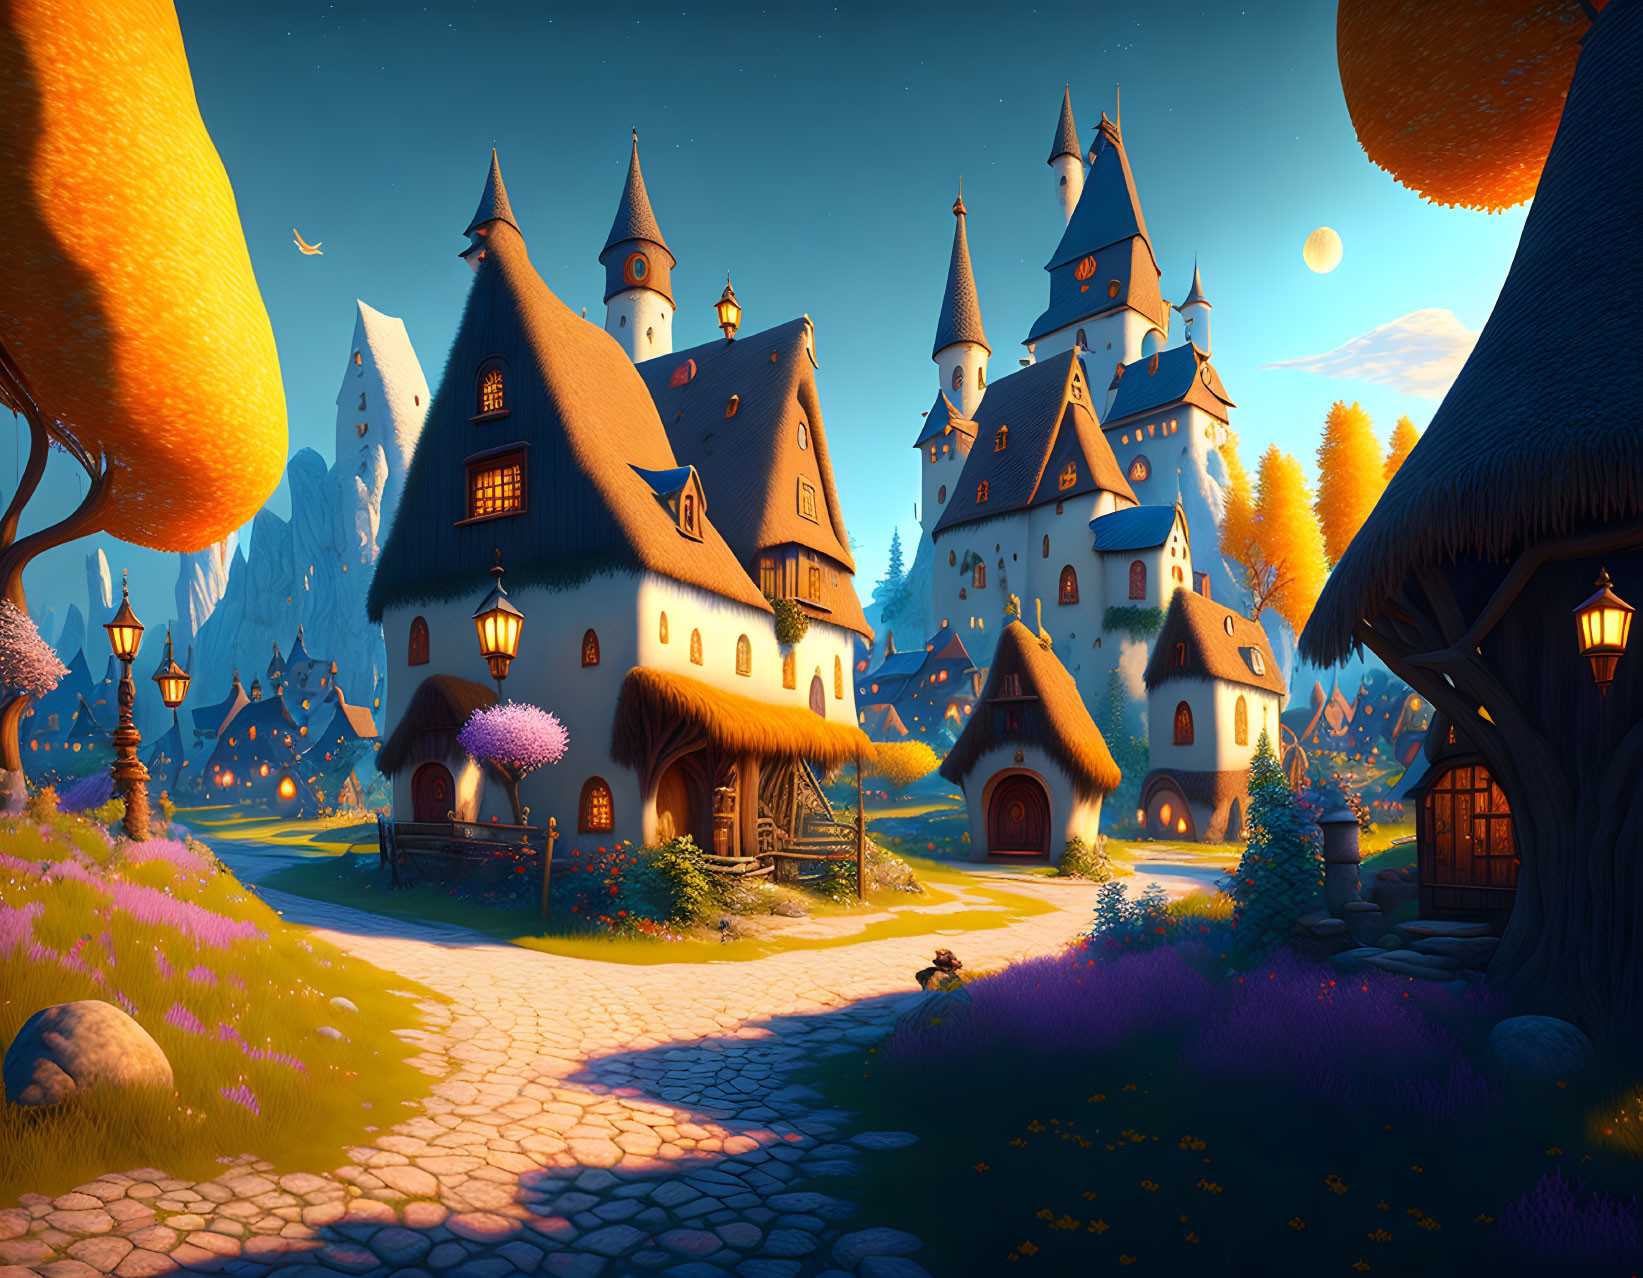 Whimsical fairytale village with oversized citrus fruit at dusk